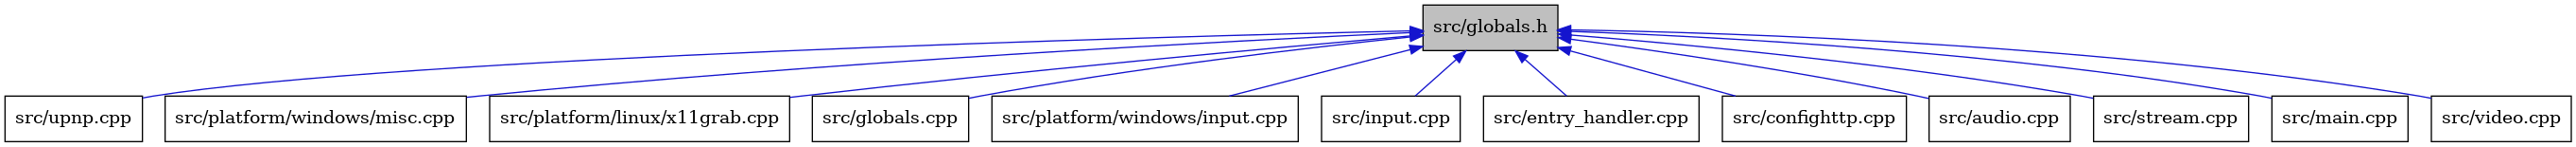 digraph {
    graph [bgcolor="#00000000"]
    node [shape=rectangle style=filled fillcolor="#FFFFFF" font=Helvetica padding=2]
    edge [color="#1414CE"]
    "12" [label="src/upnp.cpp" tooltip="src/upnp.cpp"]
    "10" [label="src/platform/windows/misc.cpp" tooltip="src/platform/windows/misc.cpp"]
    "8" [label="src/platform/linux/x11grab.cpp" tooltip="src/platform/linux/x11grab.cpp"]
    "5" [label="src/globals.cpp" tooltip="src/globals.cpp"]
    "1" [label="src/globals.h" tooltip="src/globals.h" fillcolor="#BFBFBF"]
    "9" [label="src/platform/windows/input.cpp" tooltip="src/platform/windows/input.cpp"]
    "6" [label="src/input.cpp" tooltip="src/input.cpp"]
    "4" [label="src/entry_handler.cpp" tooltip="src/entry_handler.cpp"]
    "3" [label="src/confighttp.cpp" tooltip="src/confighttp.cpp"]
    "2" [label="src/audio.cpp" tooltip="src/audio.cpp"]
    "11" [label="src/stream.cpp" tooltip="src/stream.cpp"]
    "7" [label="src/main.cpp" tooltip="src/main.cpp"]
    "13" [label="src/video.cpp" tooltip="src/video.cpp"]
    "1" -> "2" [dir=back tooltip="include"]
    "1" -> "3" [dir=back tooltip="include"]
    "1" -> "4" [dir=back tooltip="include"]
    "1" -> "5" [dir=back tooltip="include"]
    "1" -> "6" [dir=back tooltip="include"]
    "1" -> "7" [dir=back tooltip="include"]
    "1" -> "8" [dir=back tooltip="include"]
    "1" -> "9" [dir=back tooltip="include"]
    "1" -> "10" [dir=back tooltip="include"]
    "1" -> "11" [dir=back tooltip="include"]
    "1" -> "12" [dir=back tooltip="include"]
    "1" -> "13" [dir=back tooltip="include"]
}